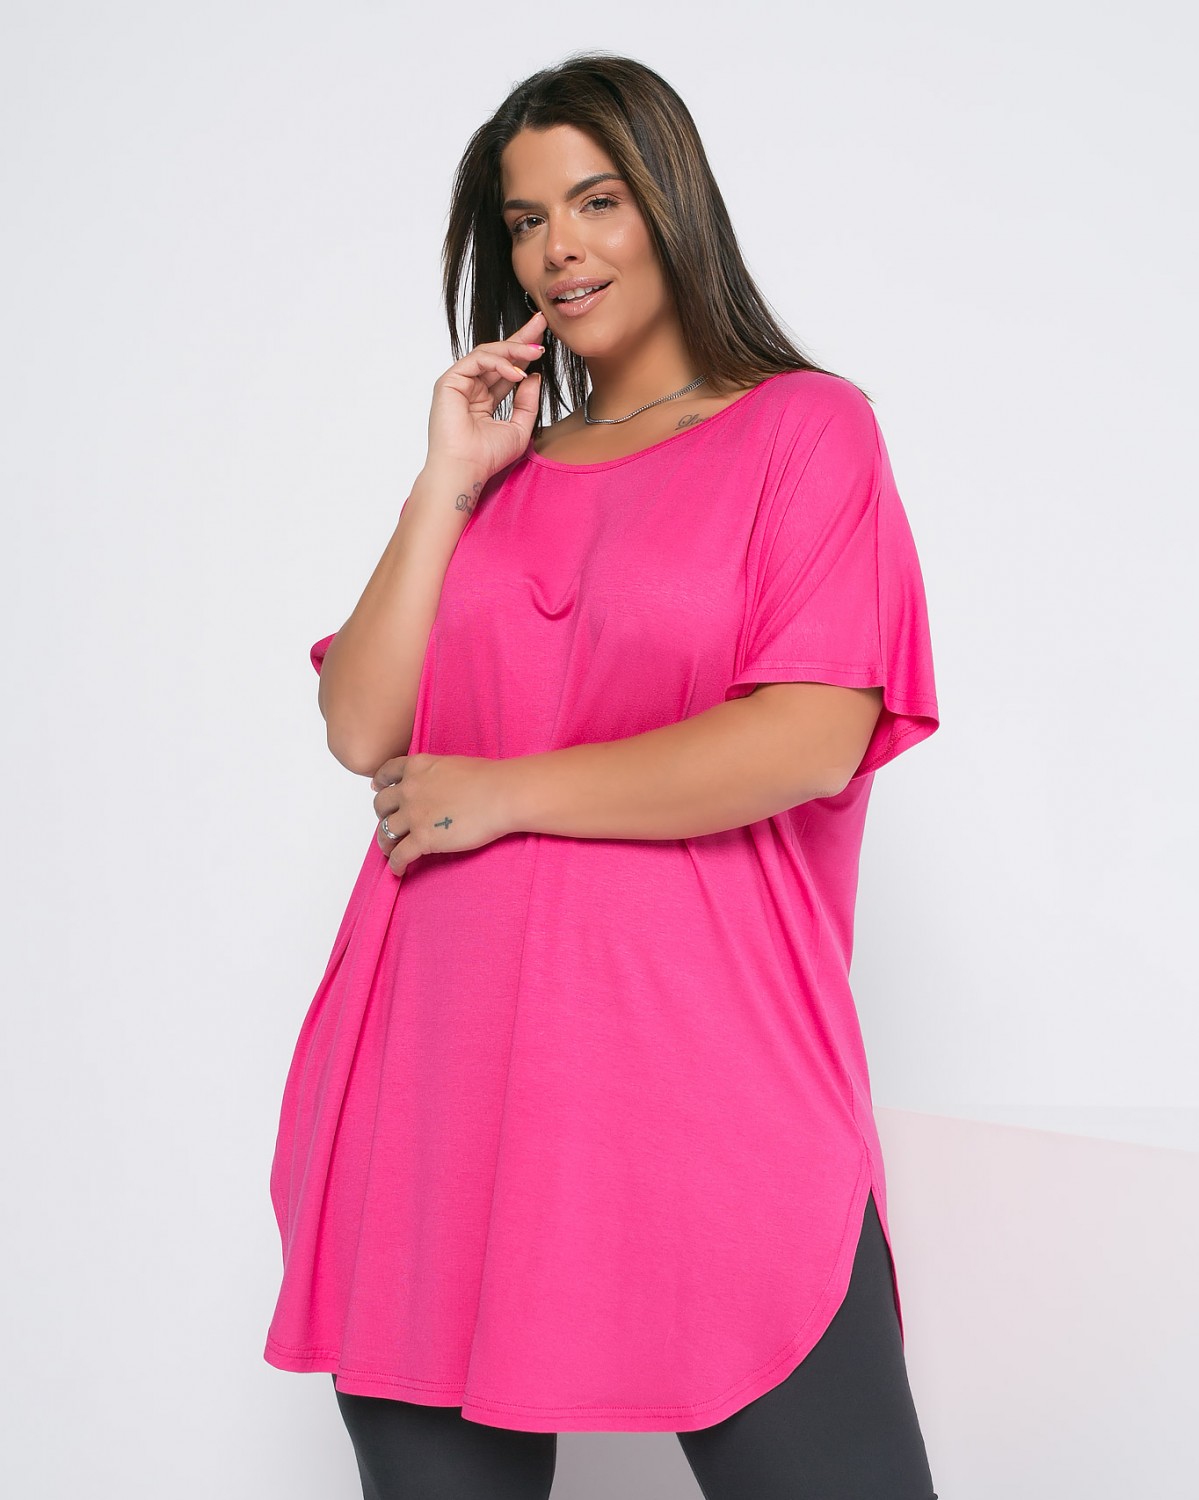 Elise Τ-Shirt, kolor hot pink